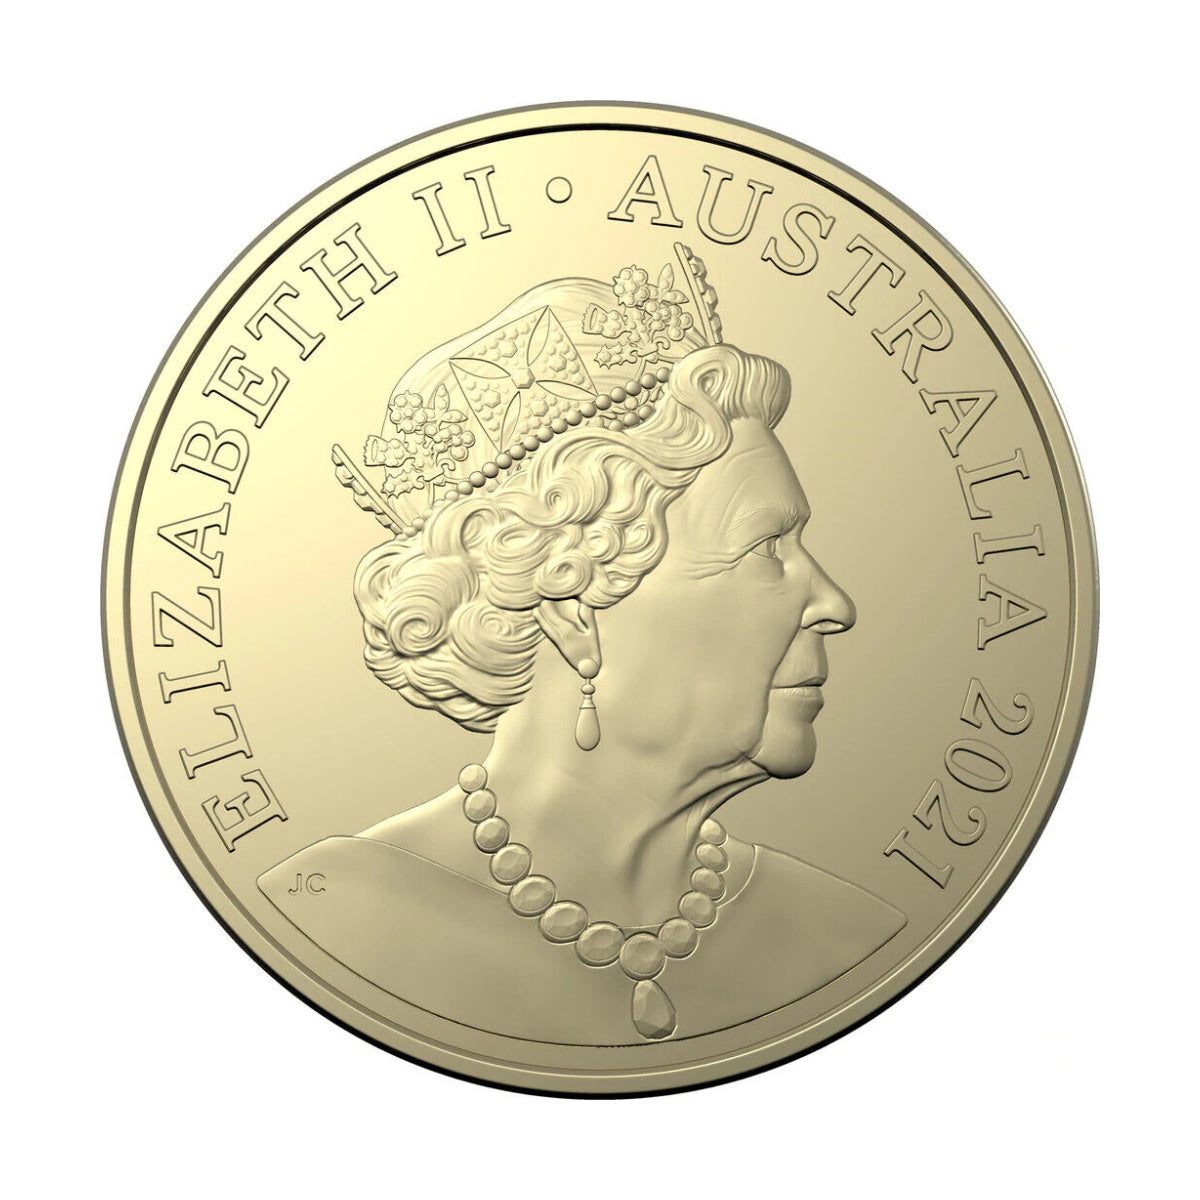 2021 Centenary of Rotary Coloured $1 Aluminium-Bronze Uncirculated Coin